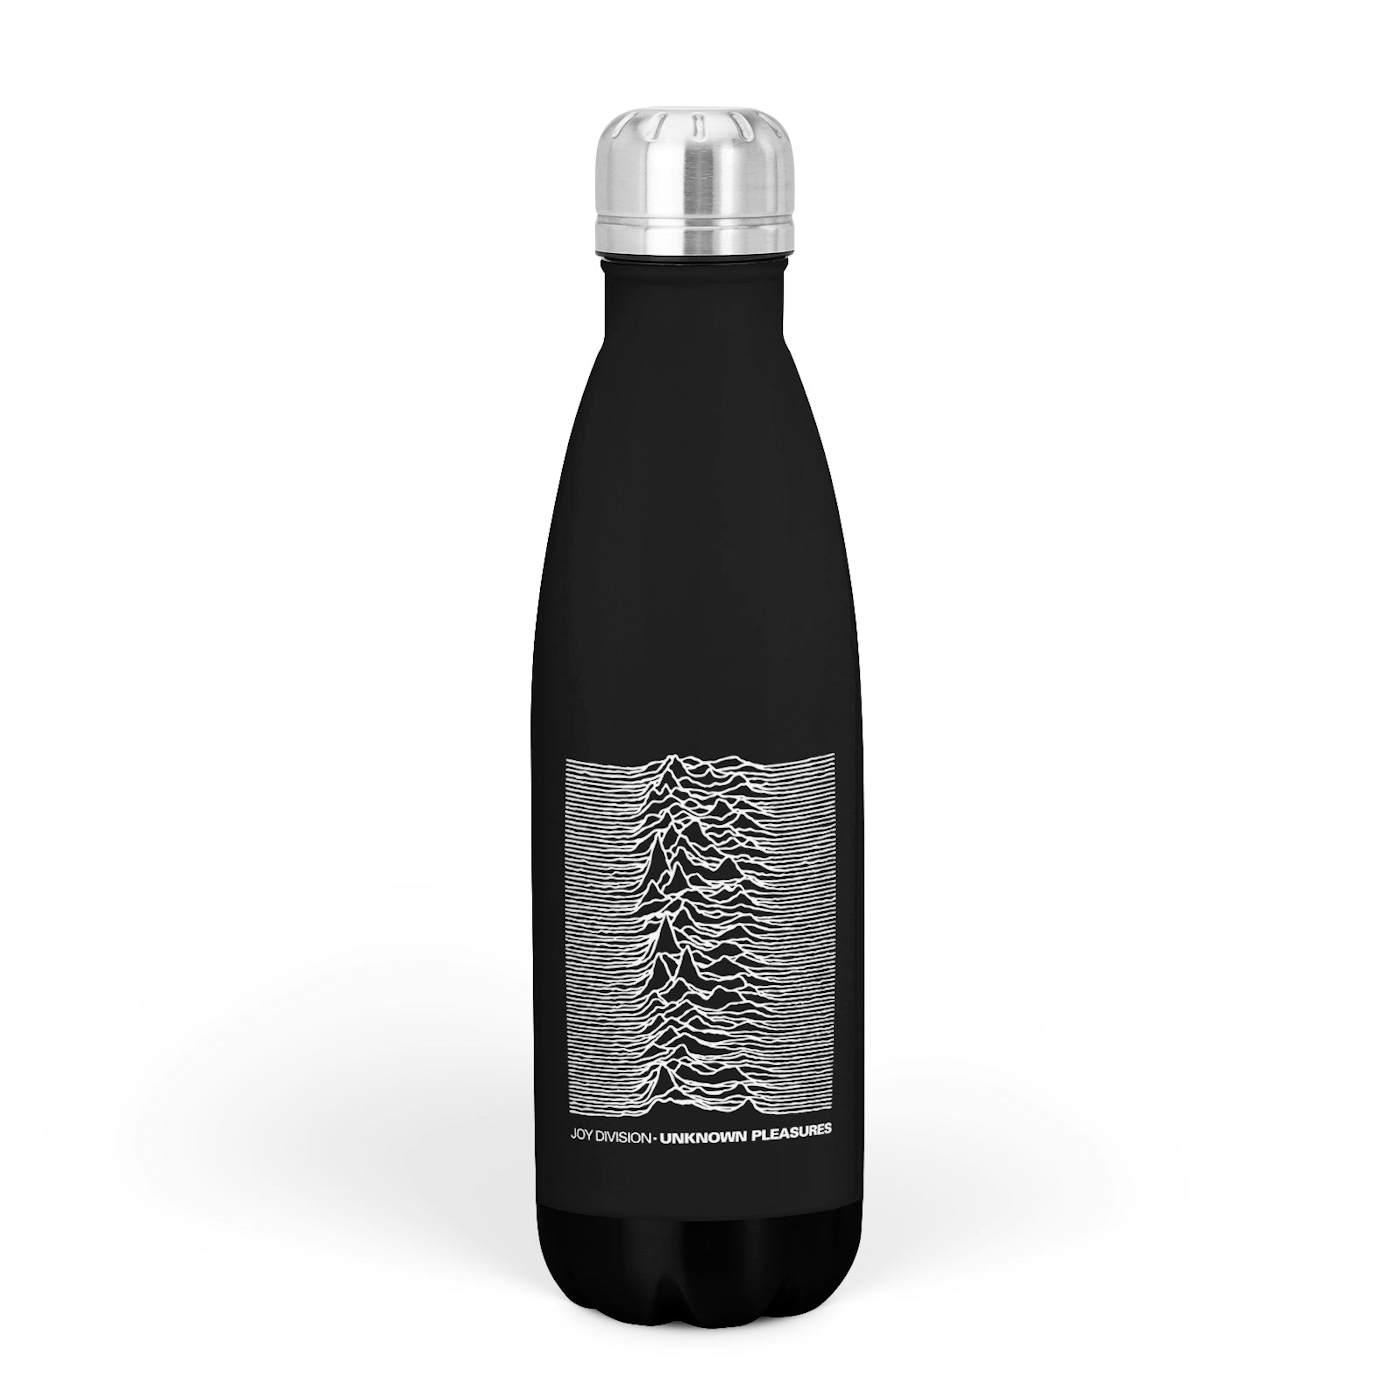 Rocksax Joy Division Drink Bottle - Unknown Pleasures